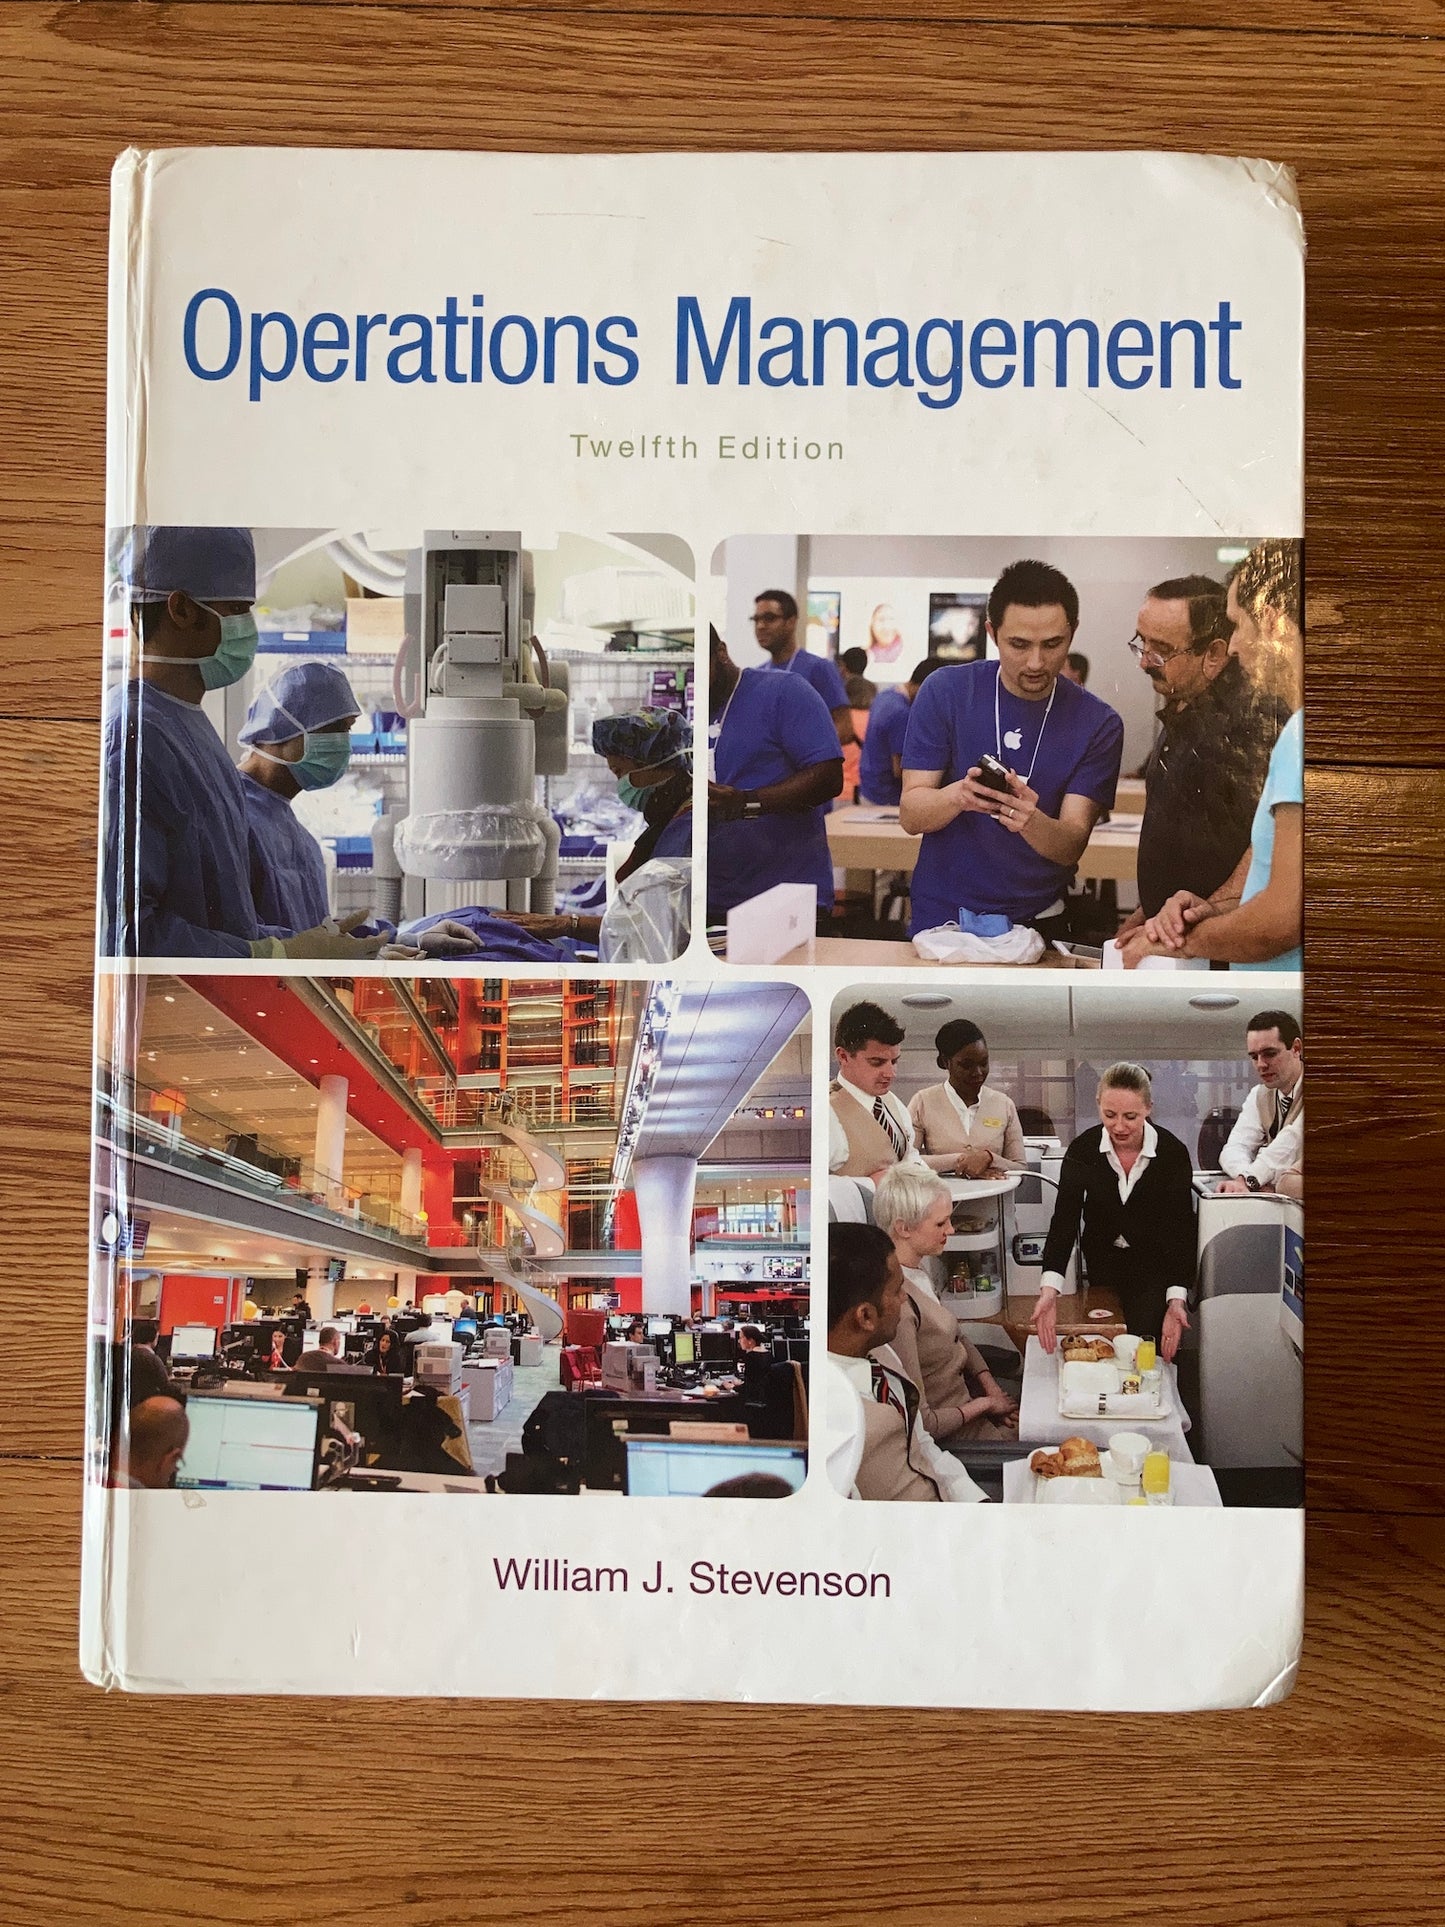 Operations Management (12th Edition), William J Stevenson